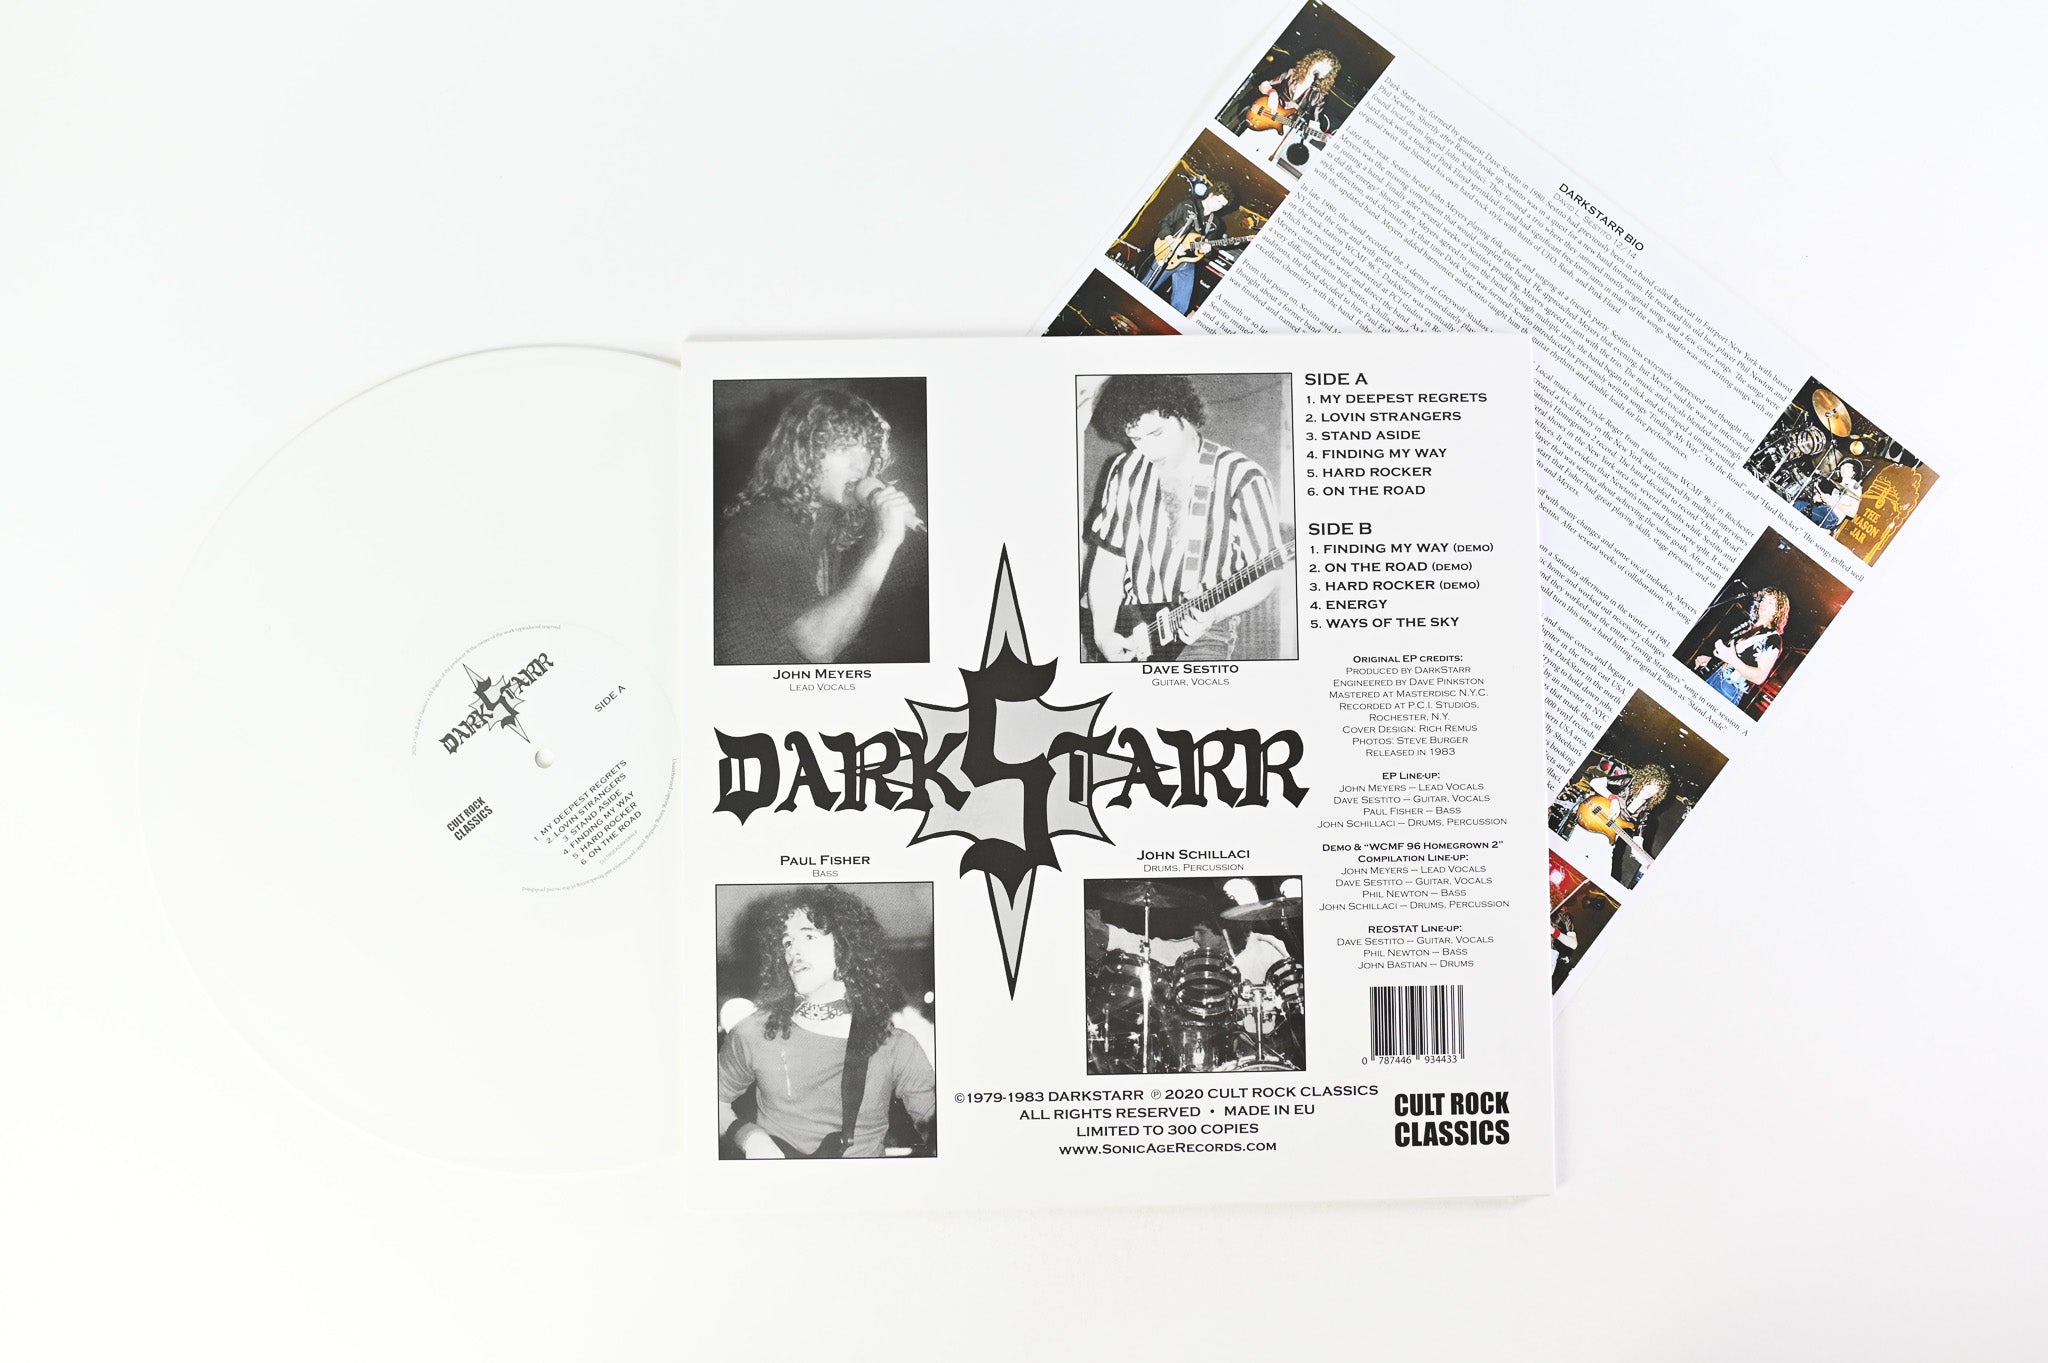 Darkstarr - Darkstarr on Cult Rock Classics Ltd White Vinyl Reissue